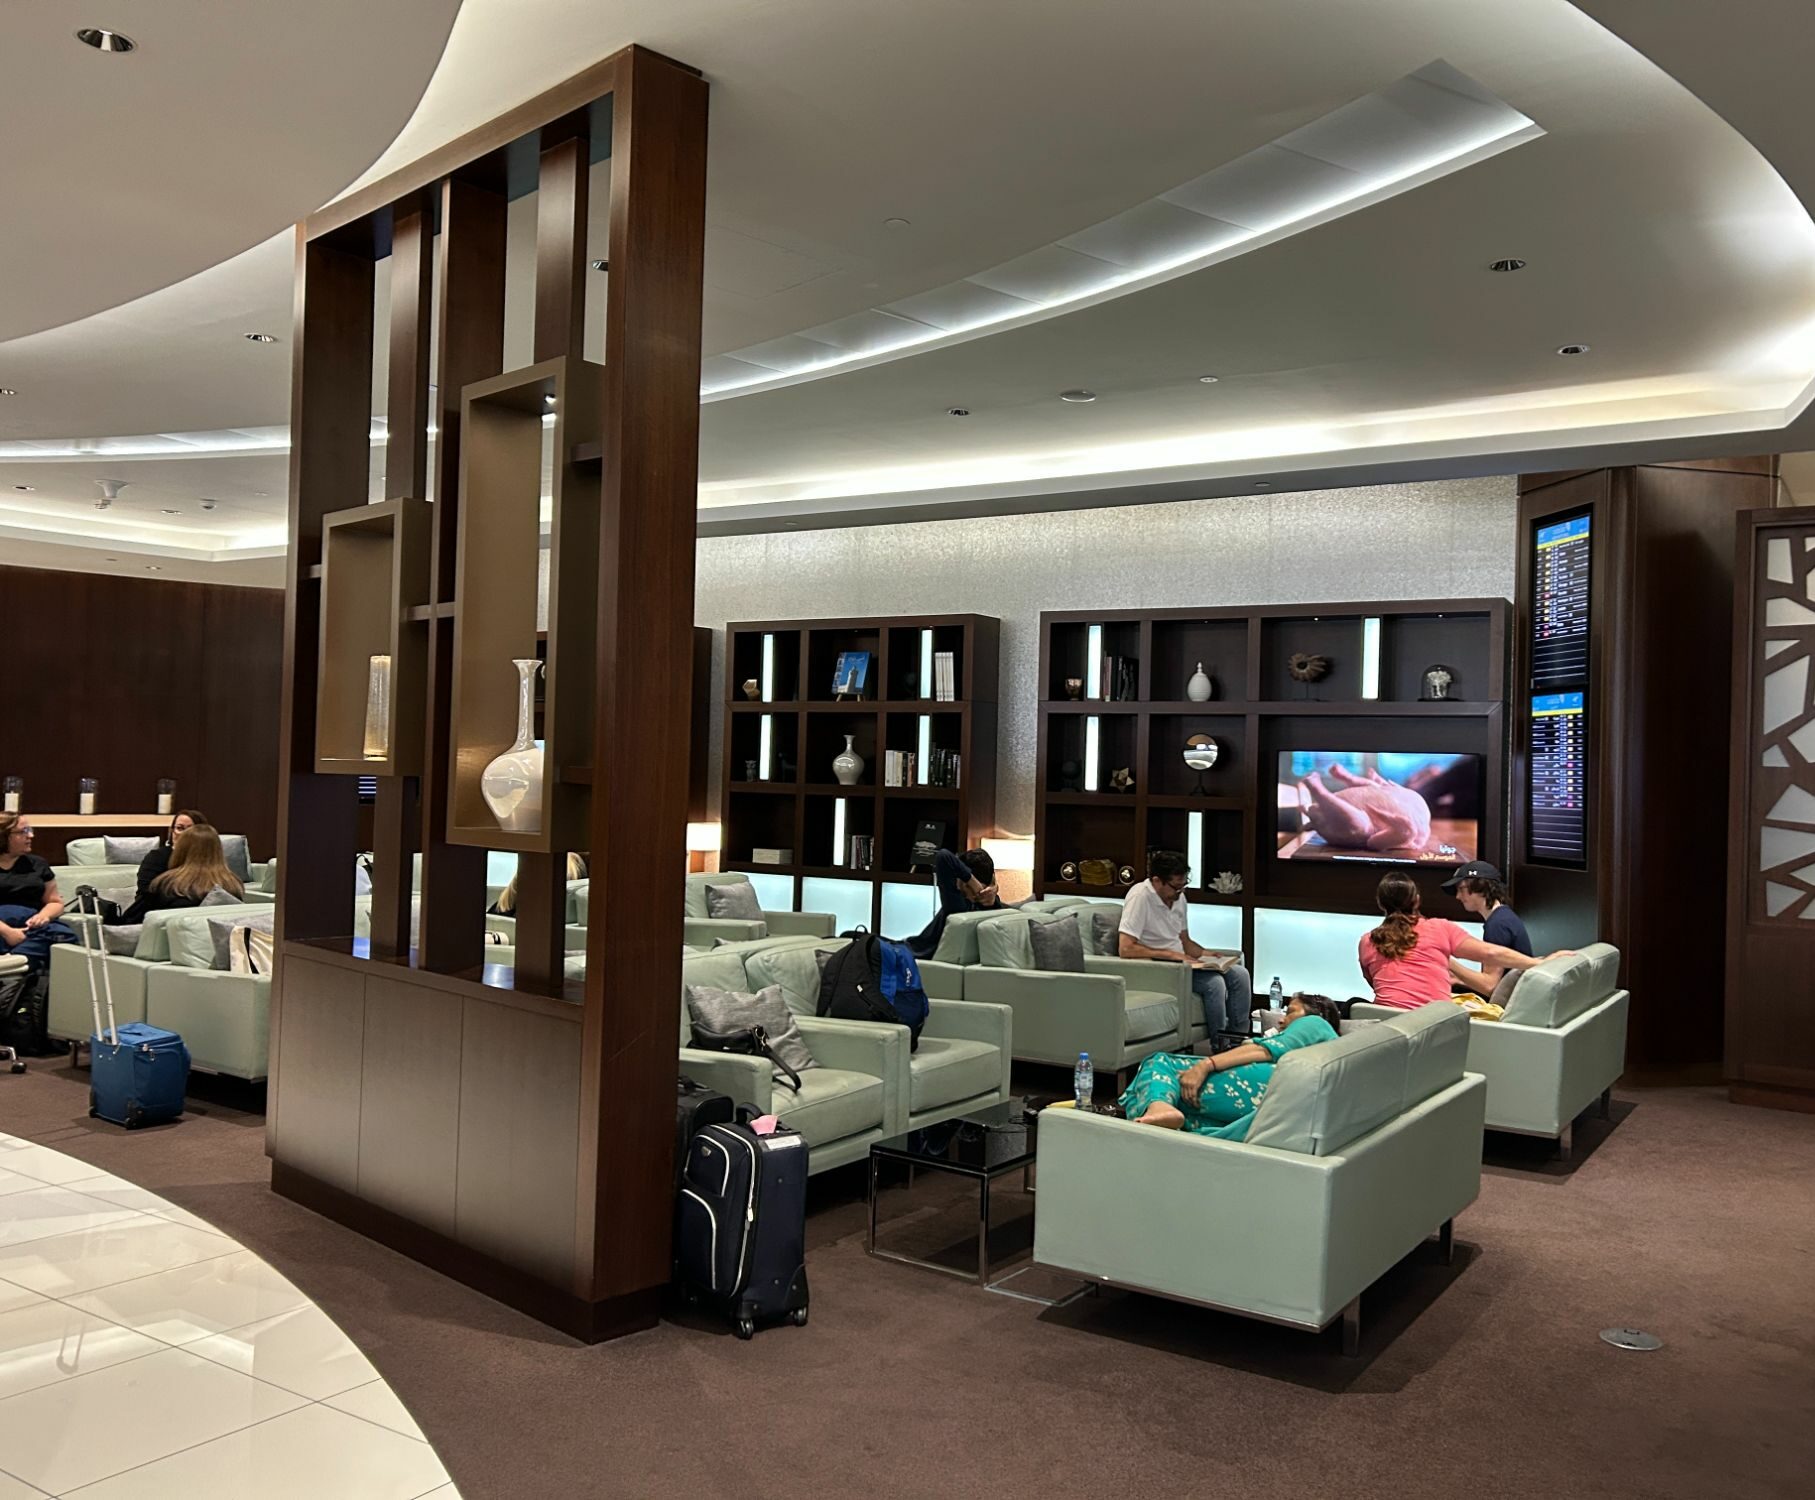 Etihad business class lounge interiors 